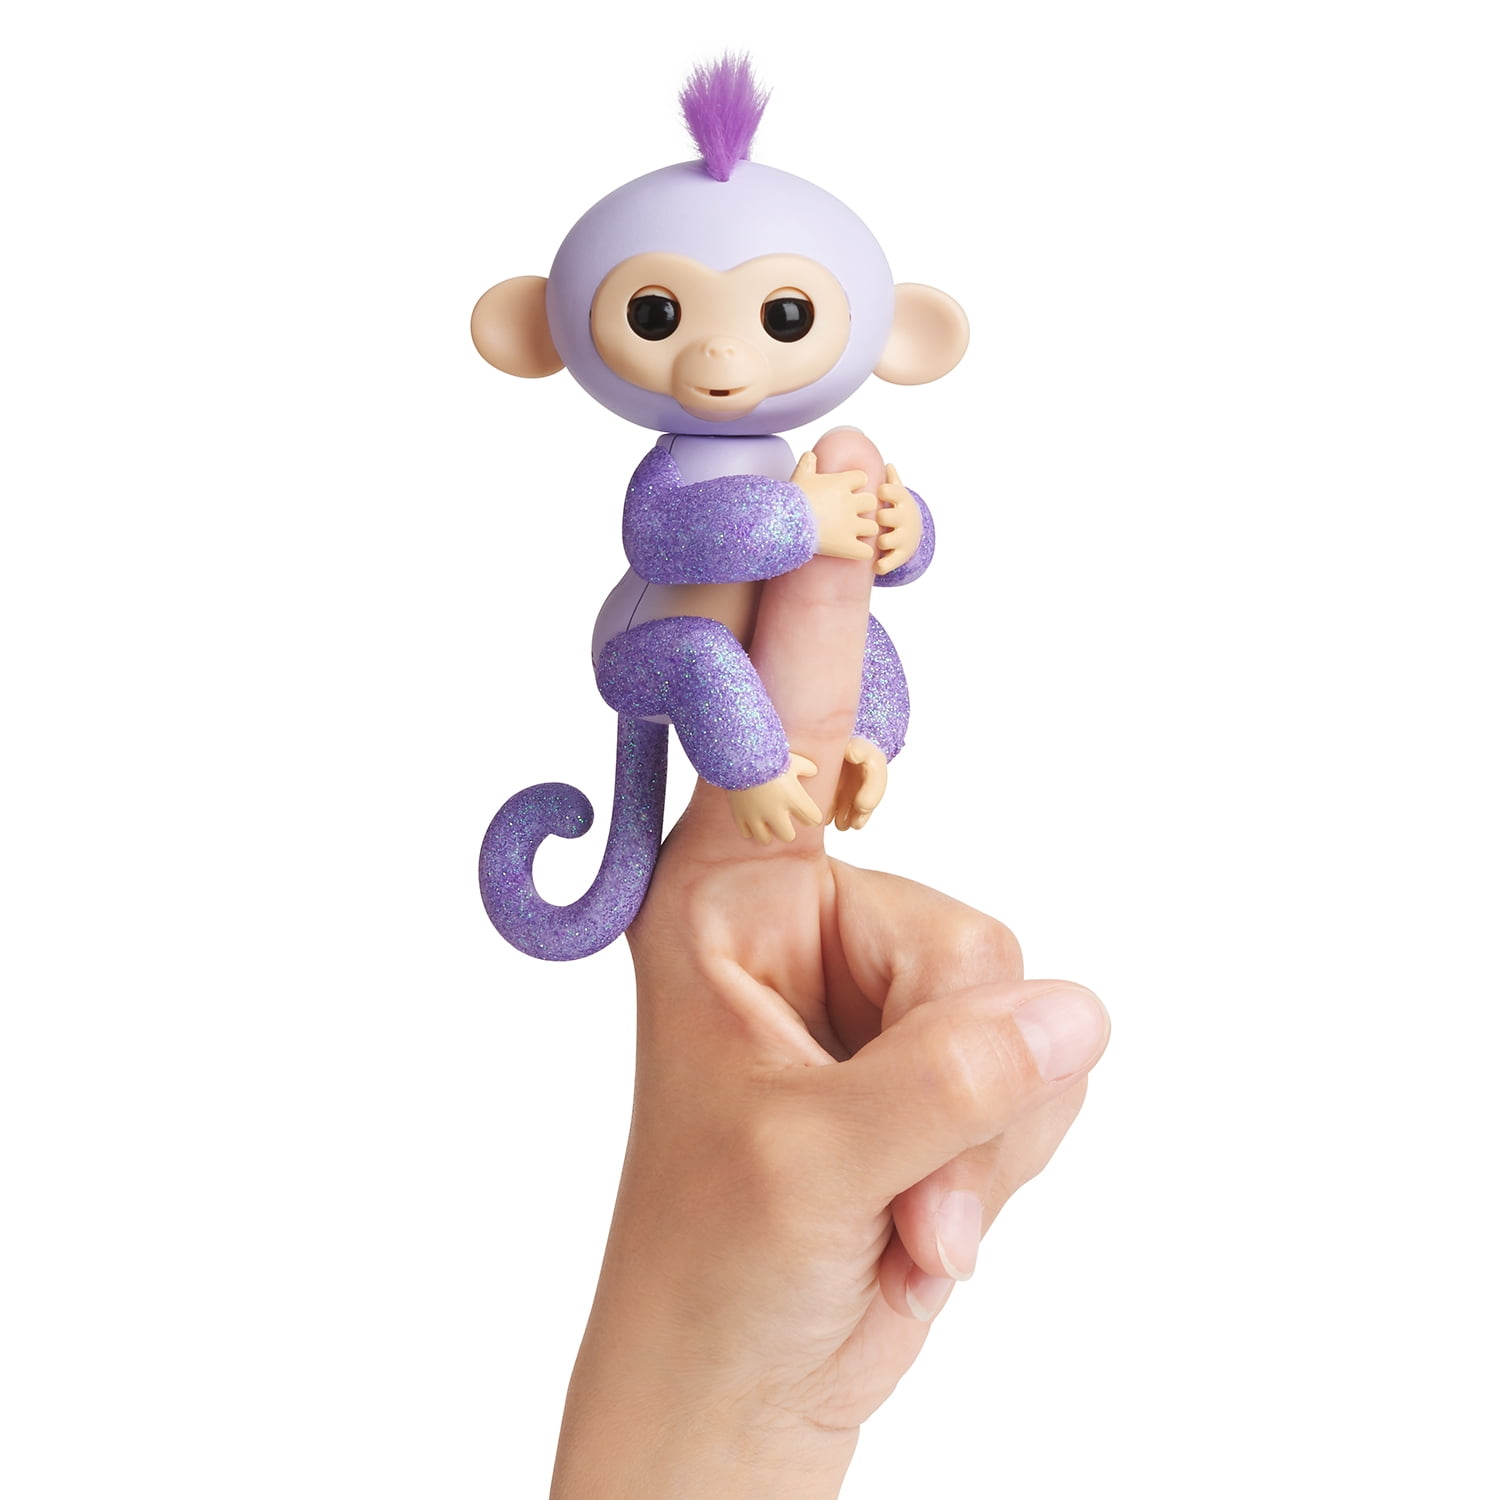 Fingerlings Glitter Monkey Interactive Baby Pet by WowWee Rose Pink Glitter Toy 